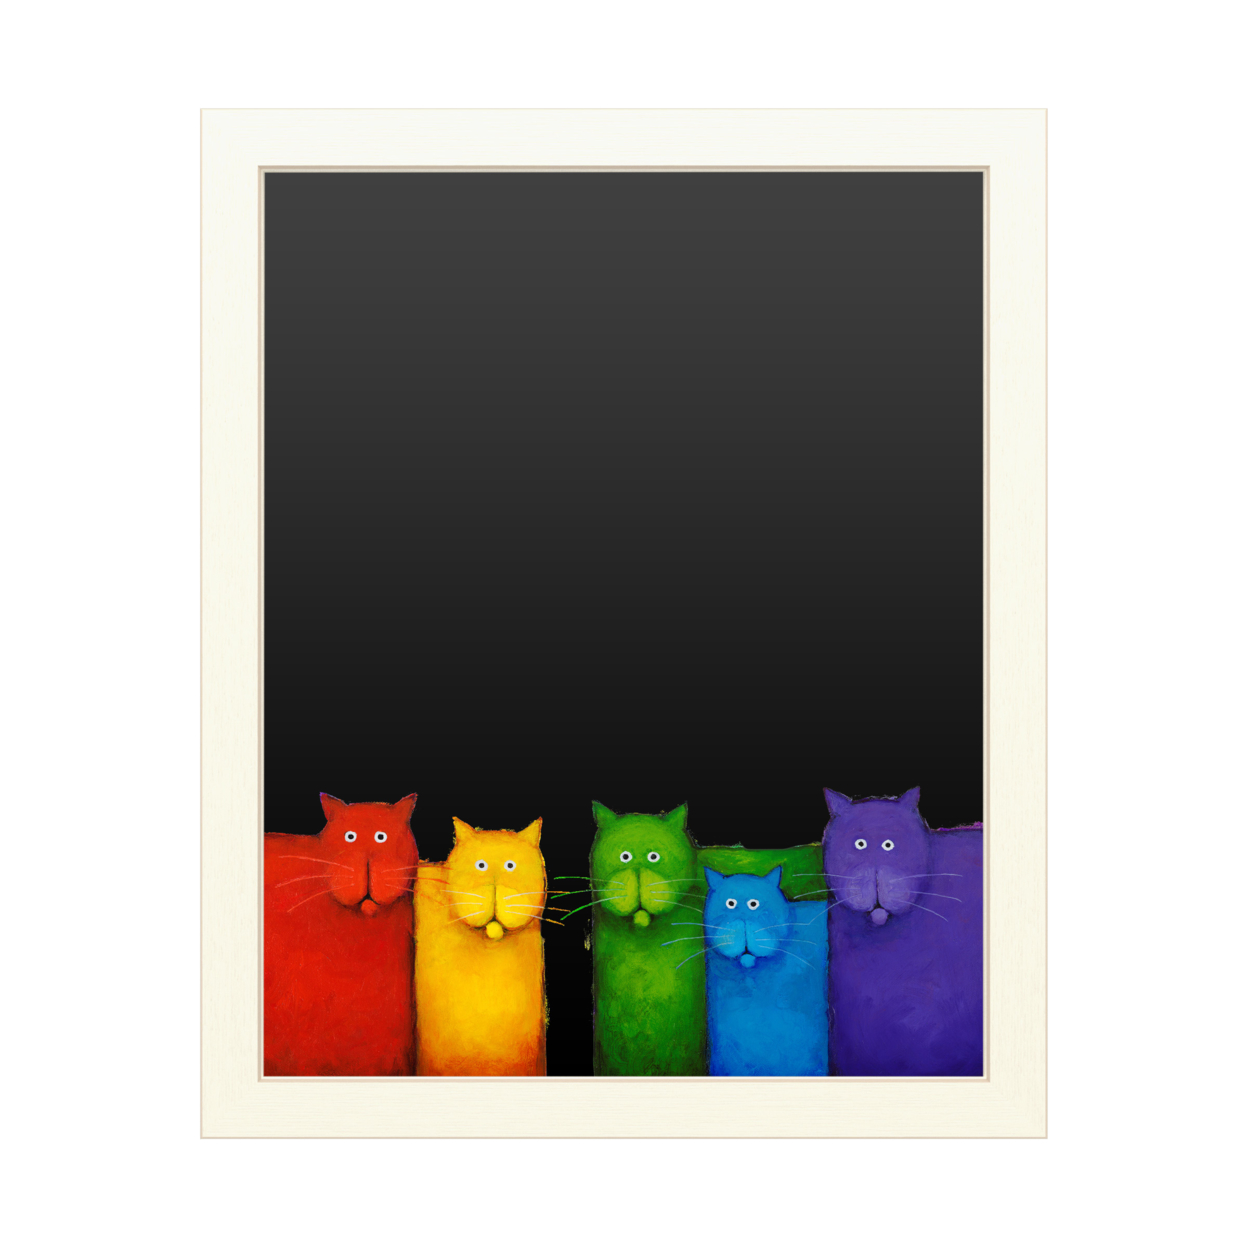 16 X 20 Chalk Board With Printed Artwork - Daniel Patrick Kessler Rainbow Cats White Board - Ready To Hang Chalkboard